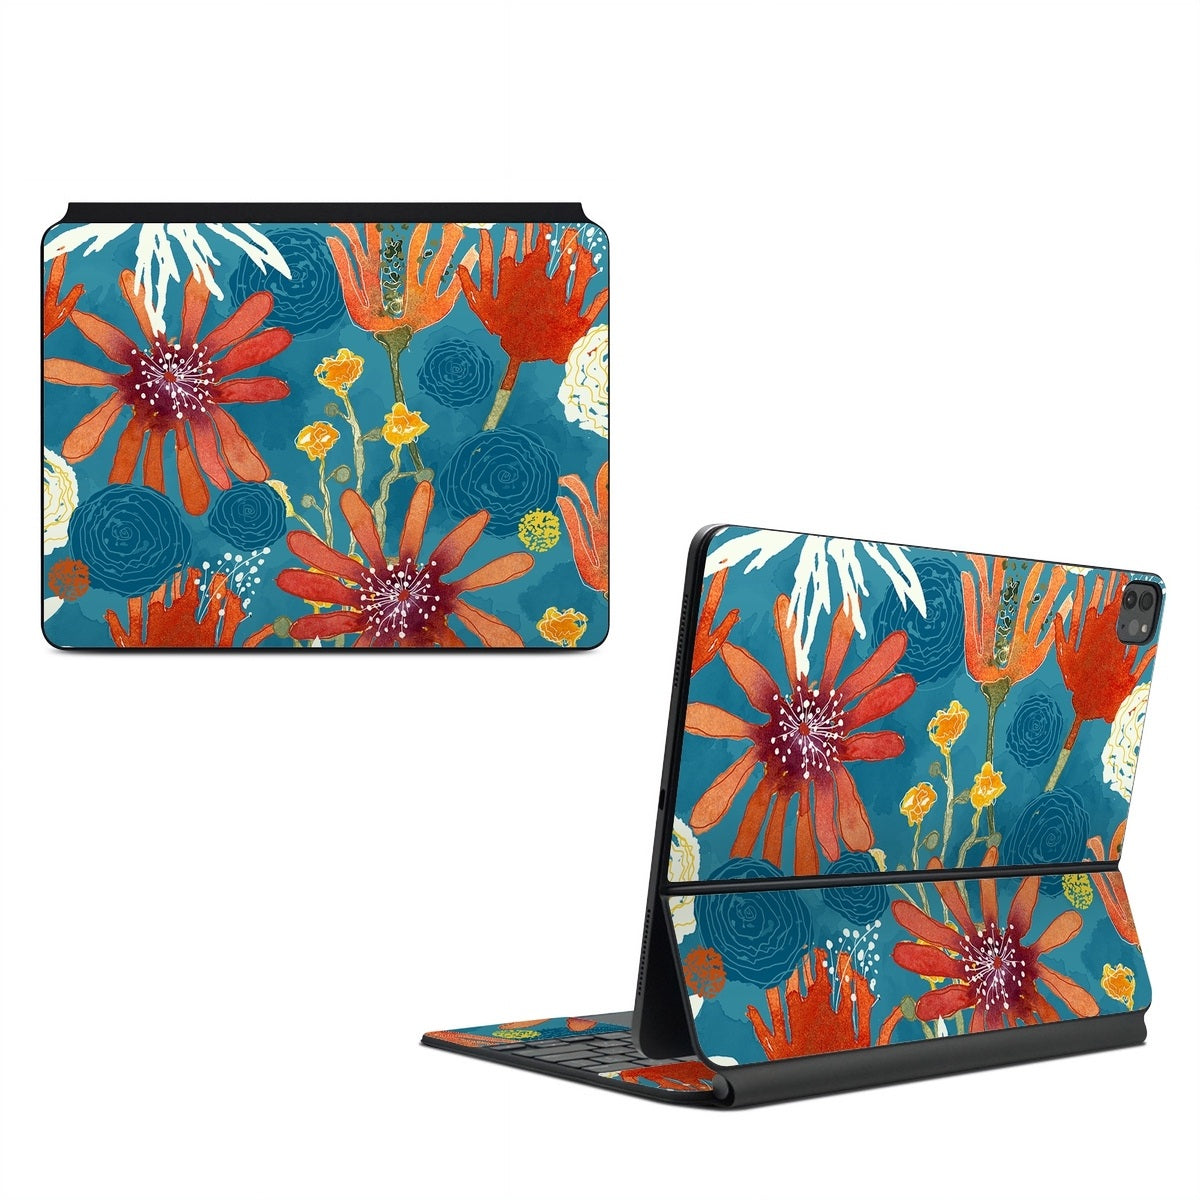 Sunbaked Blooms - Apple Magic Keyboard for iPad Skin